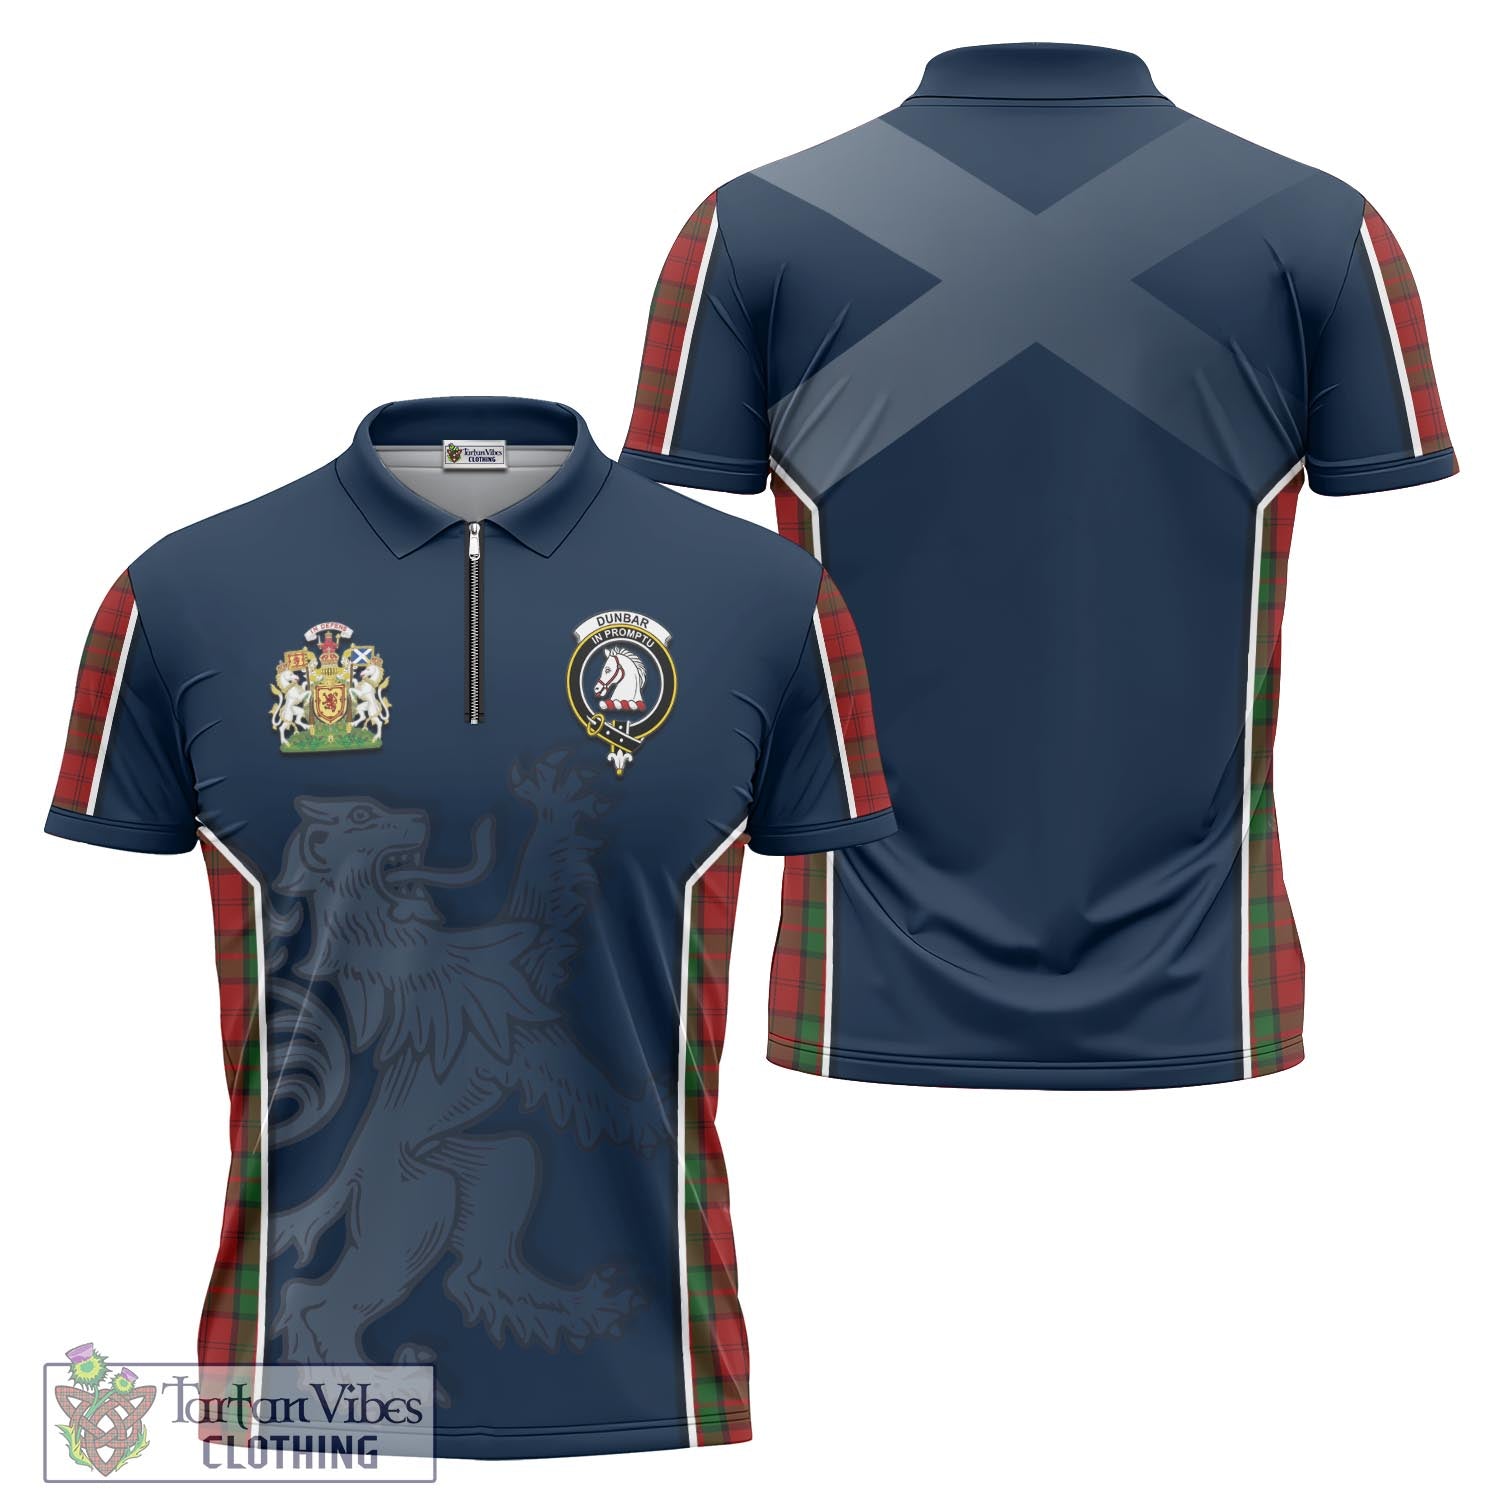 Tartan Vibes Clothing Dunbar Tartan Zipper Polo Shirt with Family Crest and Lion Rampant Vibes Sport Style